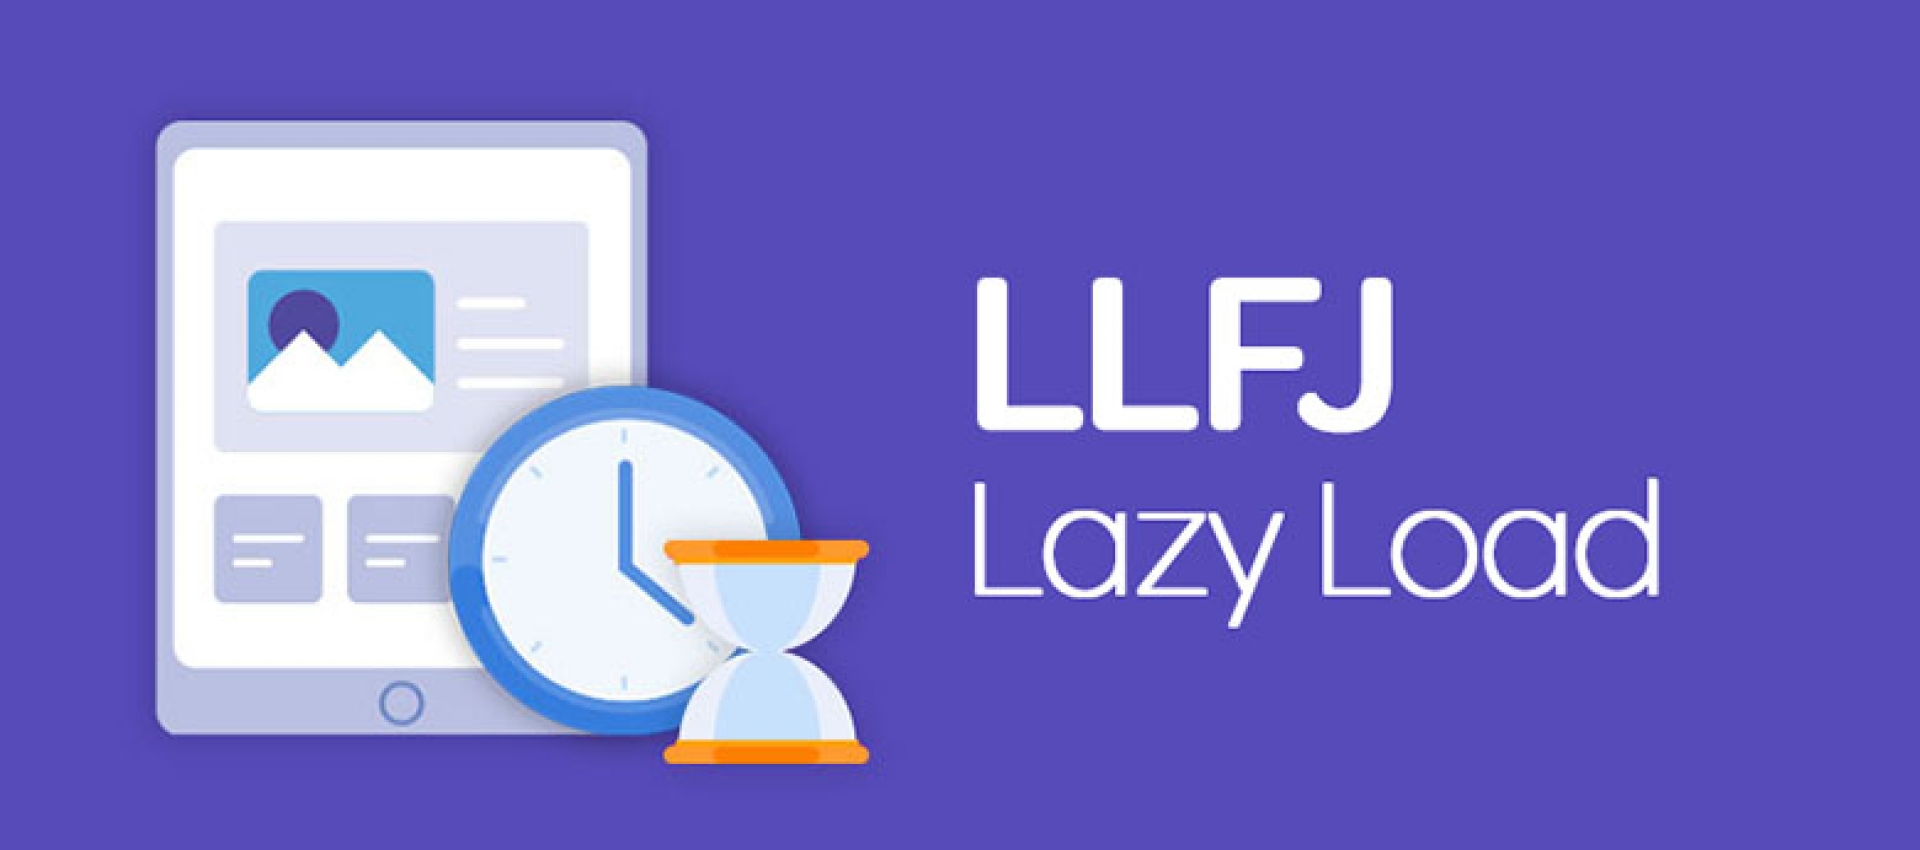 Joomla! Lazy Load Eklentisi - LLFJ Lazy Load